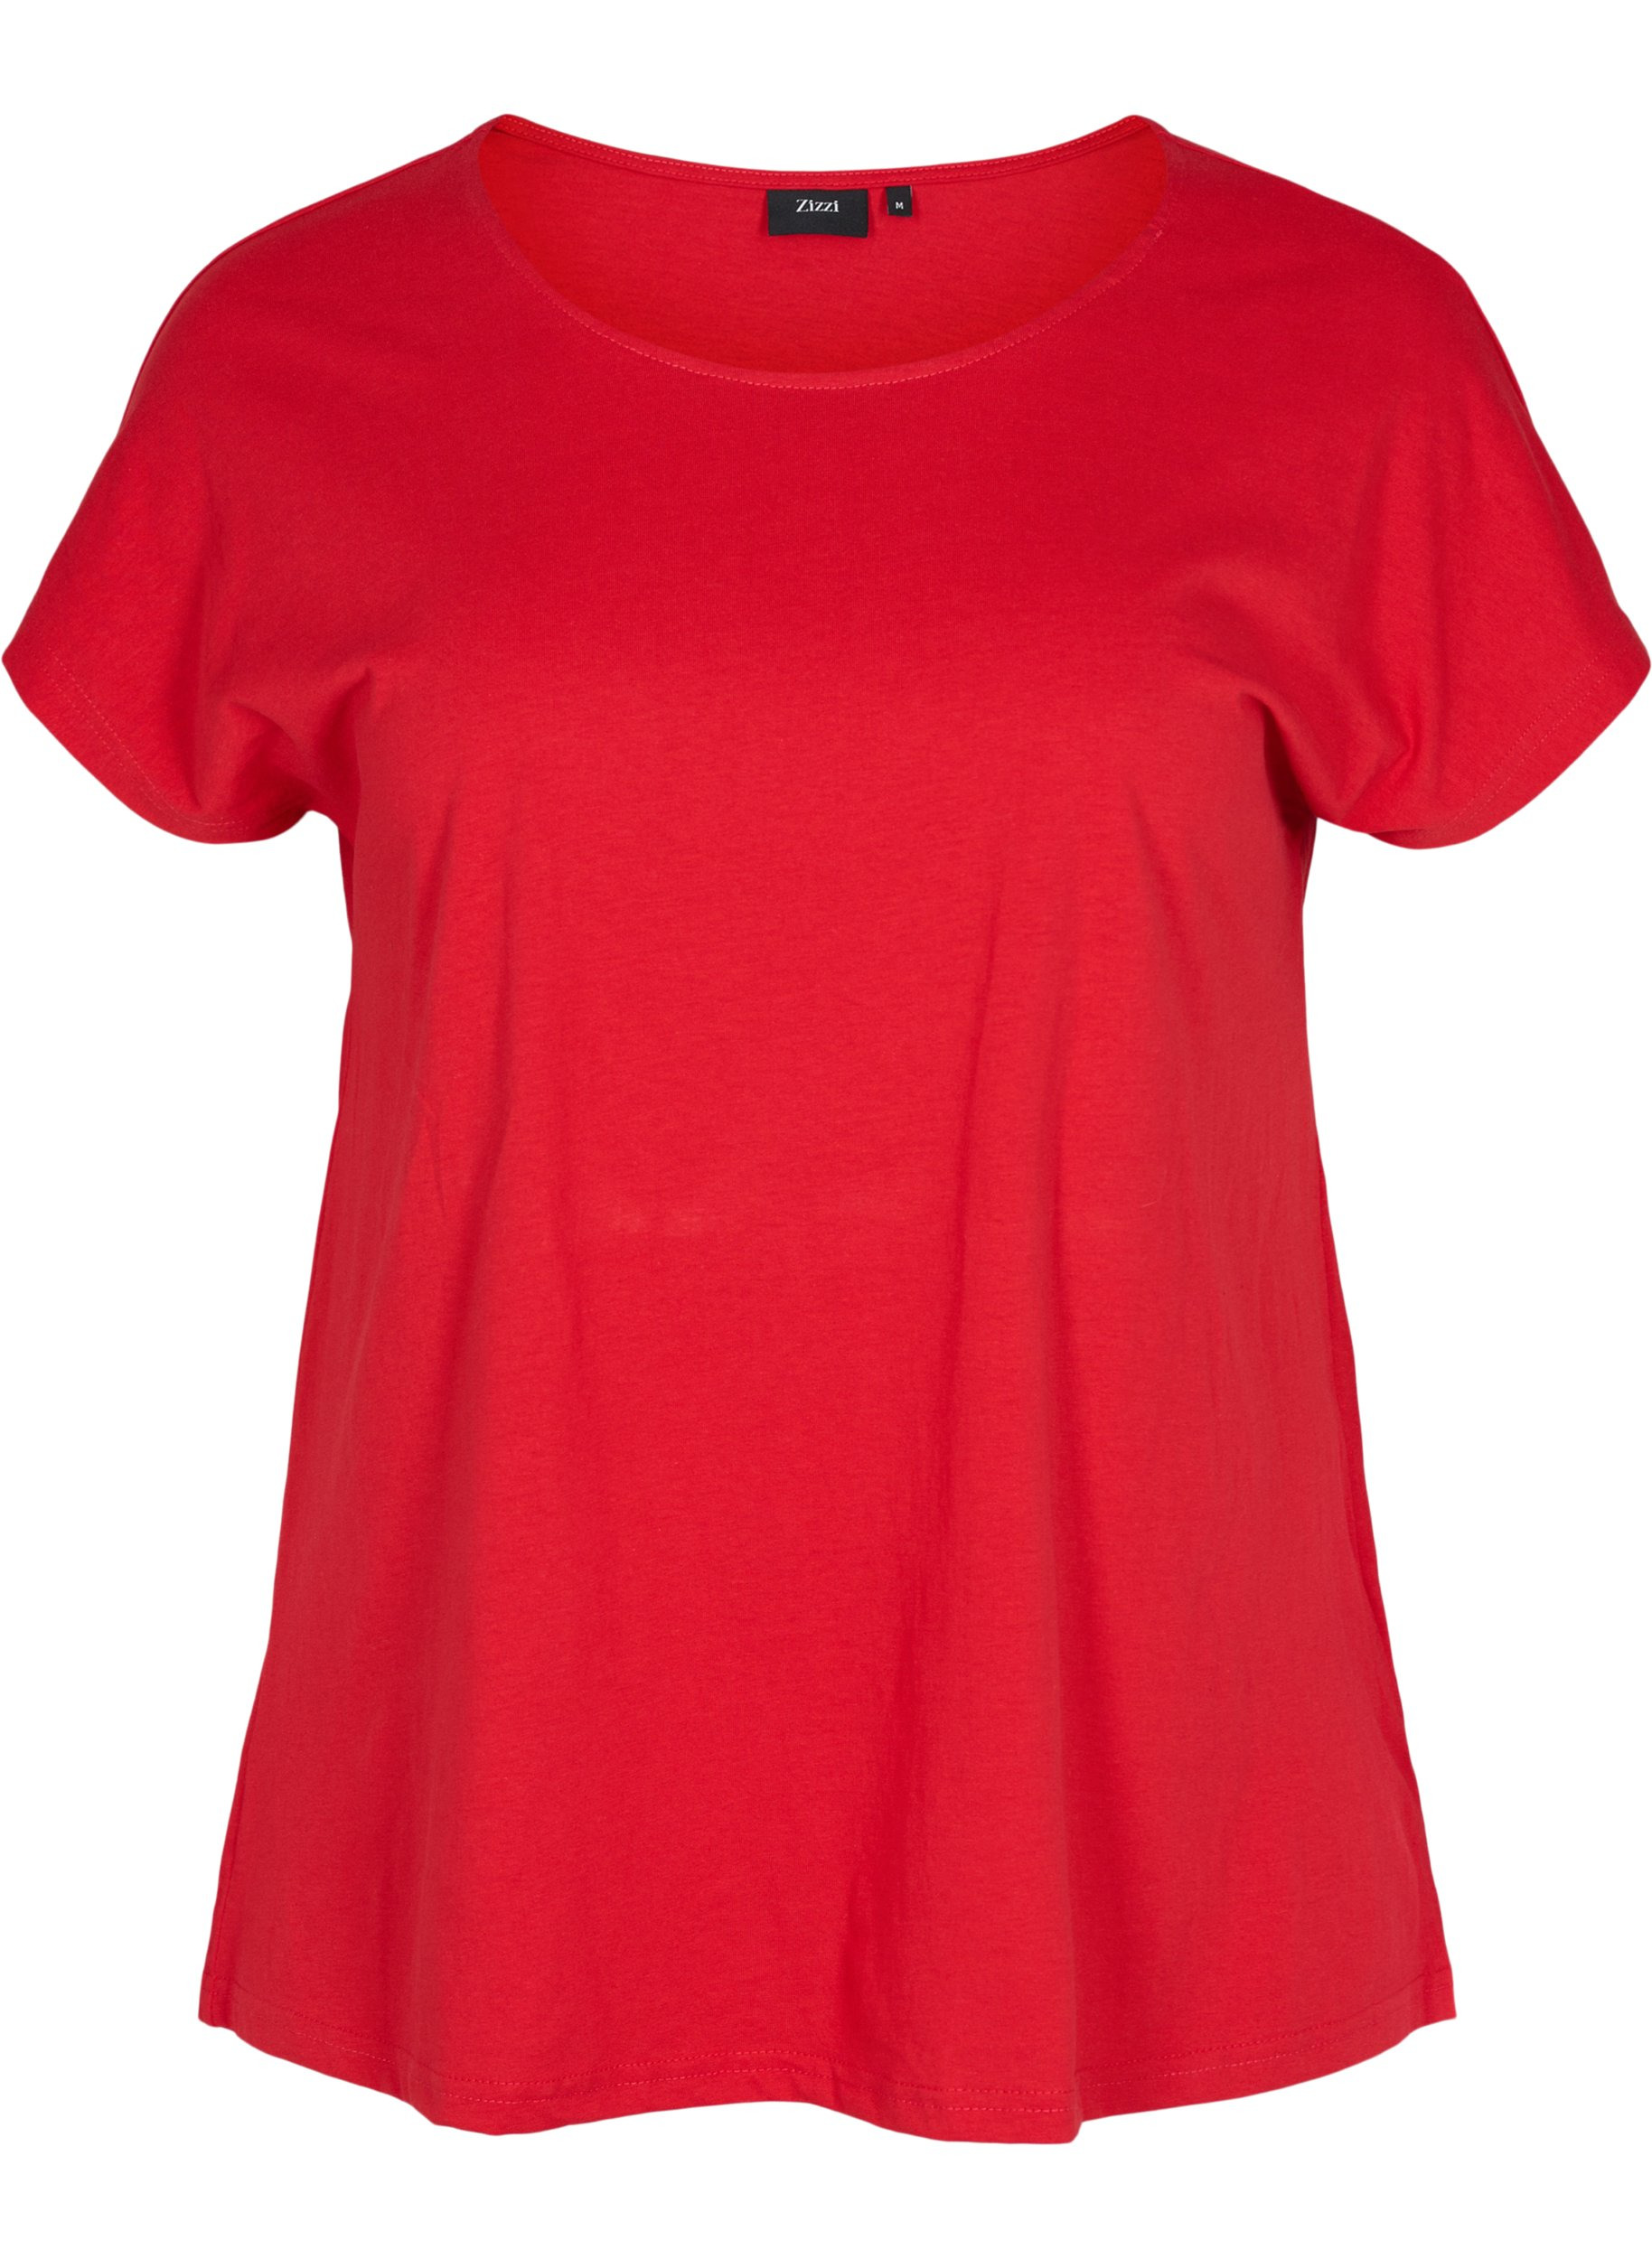 Cotton mix t-shirt, Tango Red